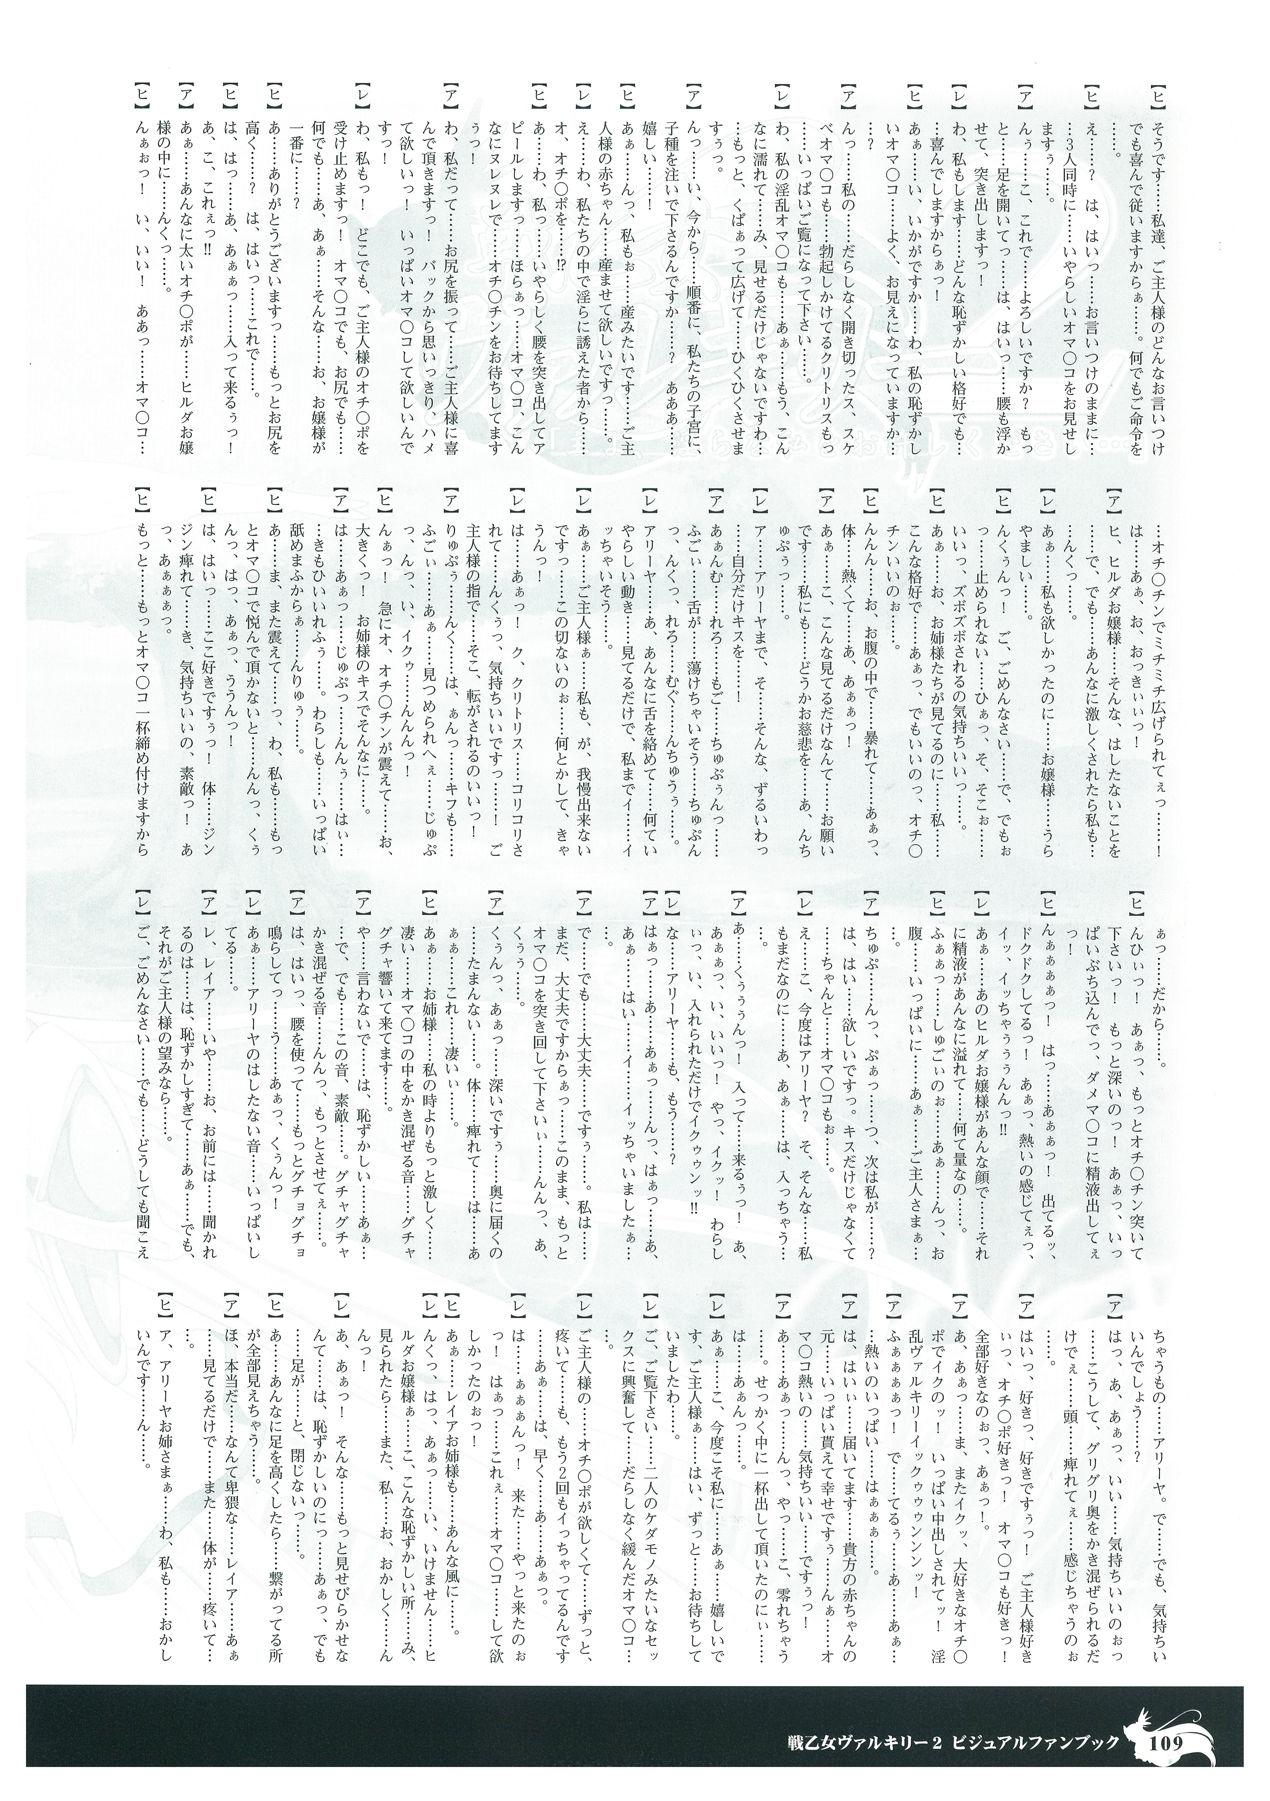 Ikusa Otome Valkyrie 2 Visual Fanbook 110